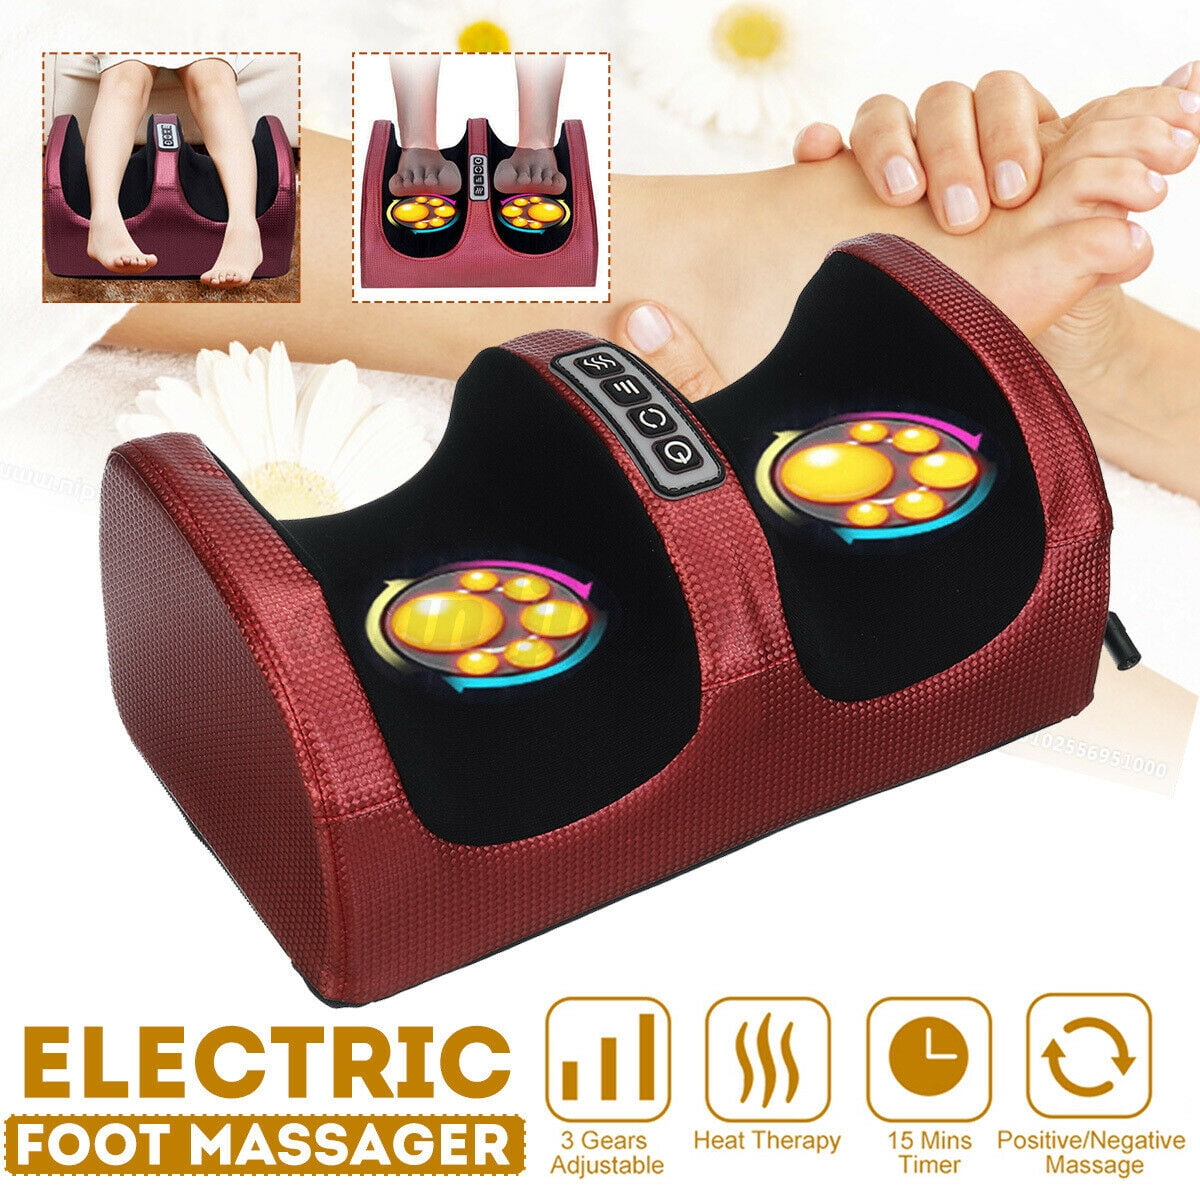 Nekteck NK-FM-100-BLK Shiatsu Heated Electric Foot Massager Black